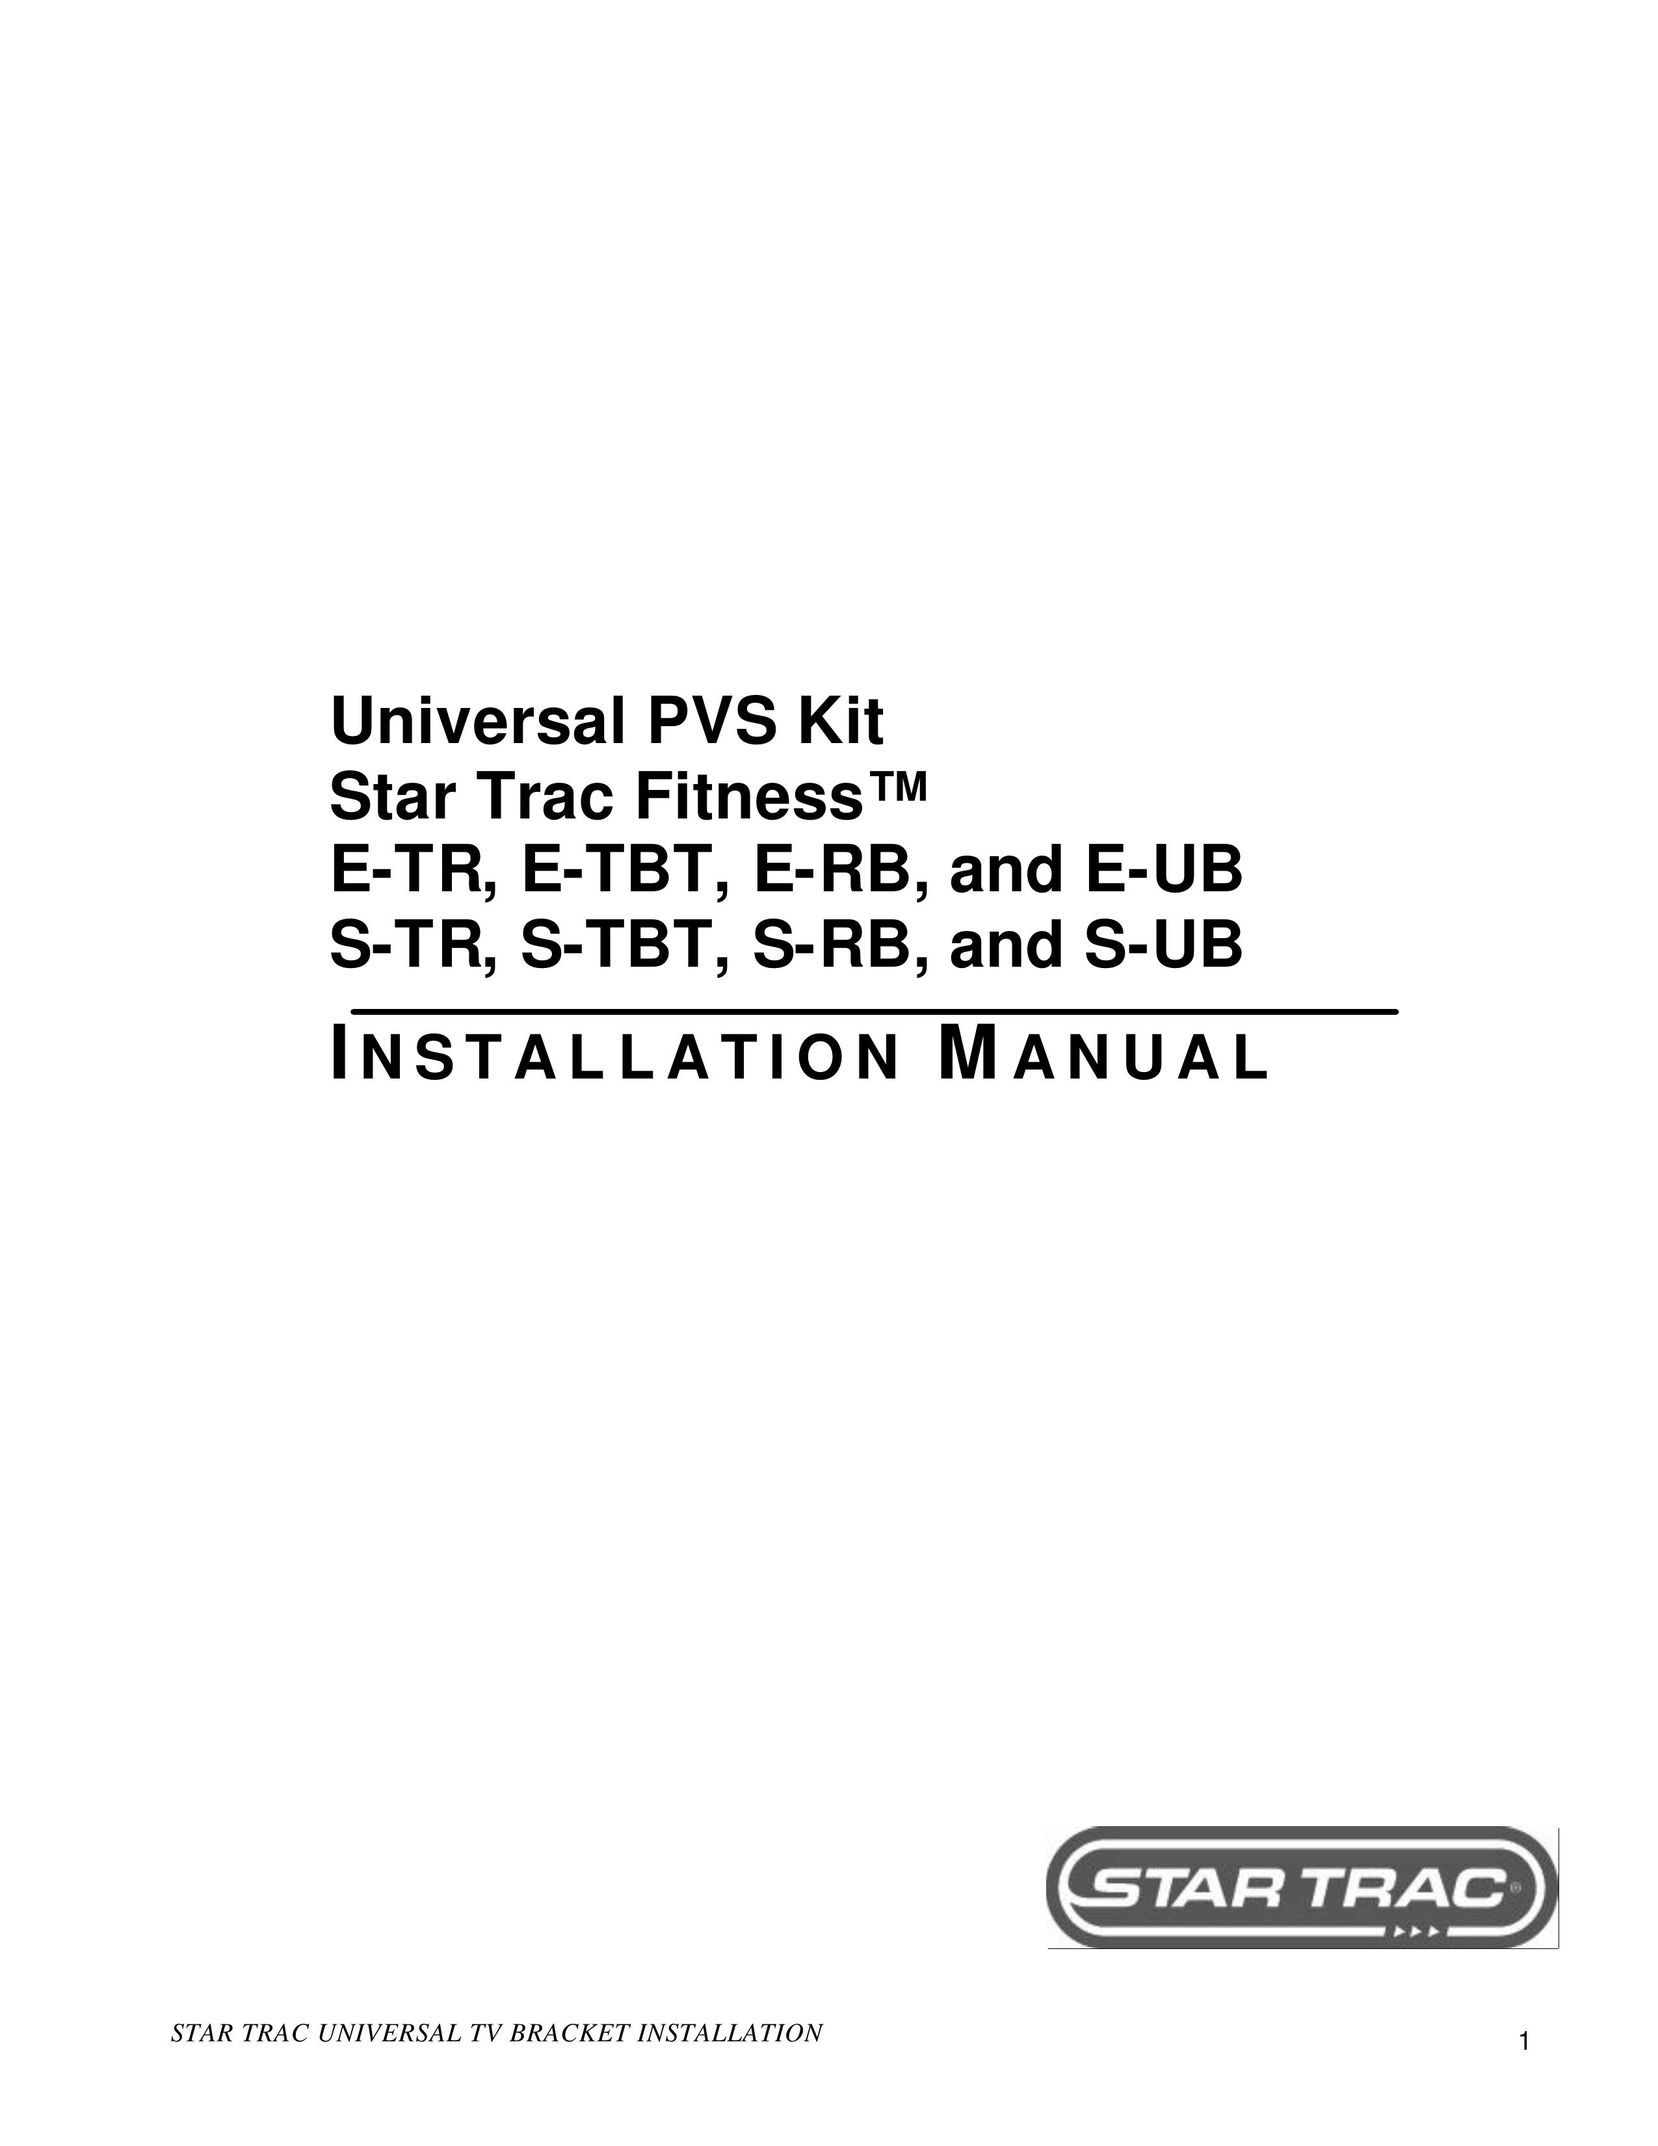 Star Trac S-UB Fitness Electronics User Manual